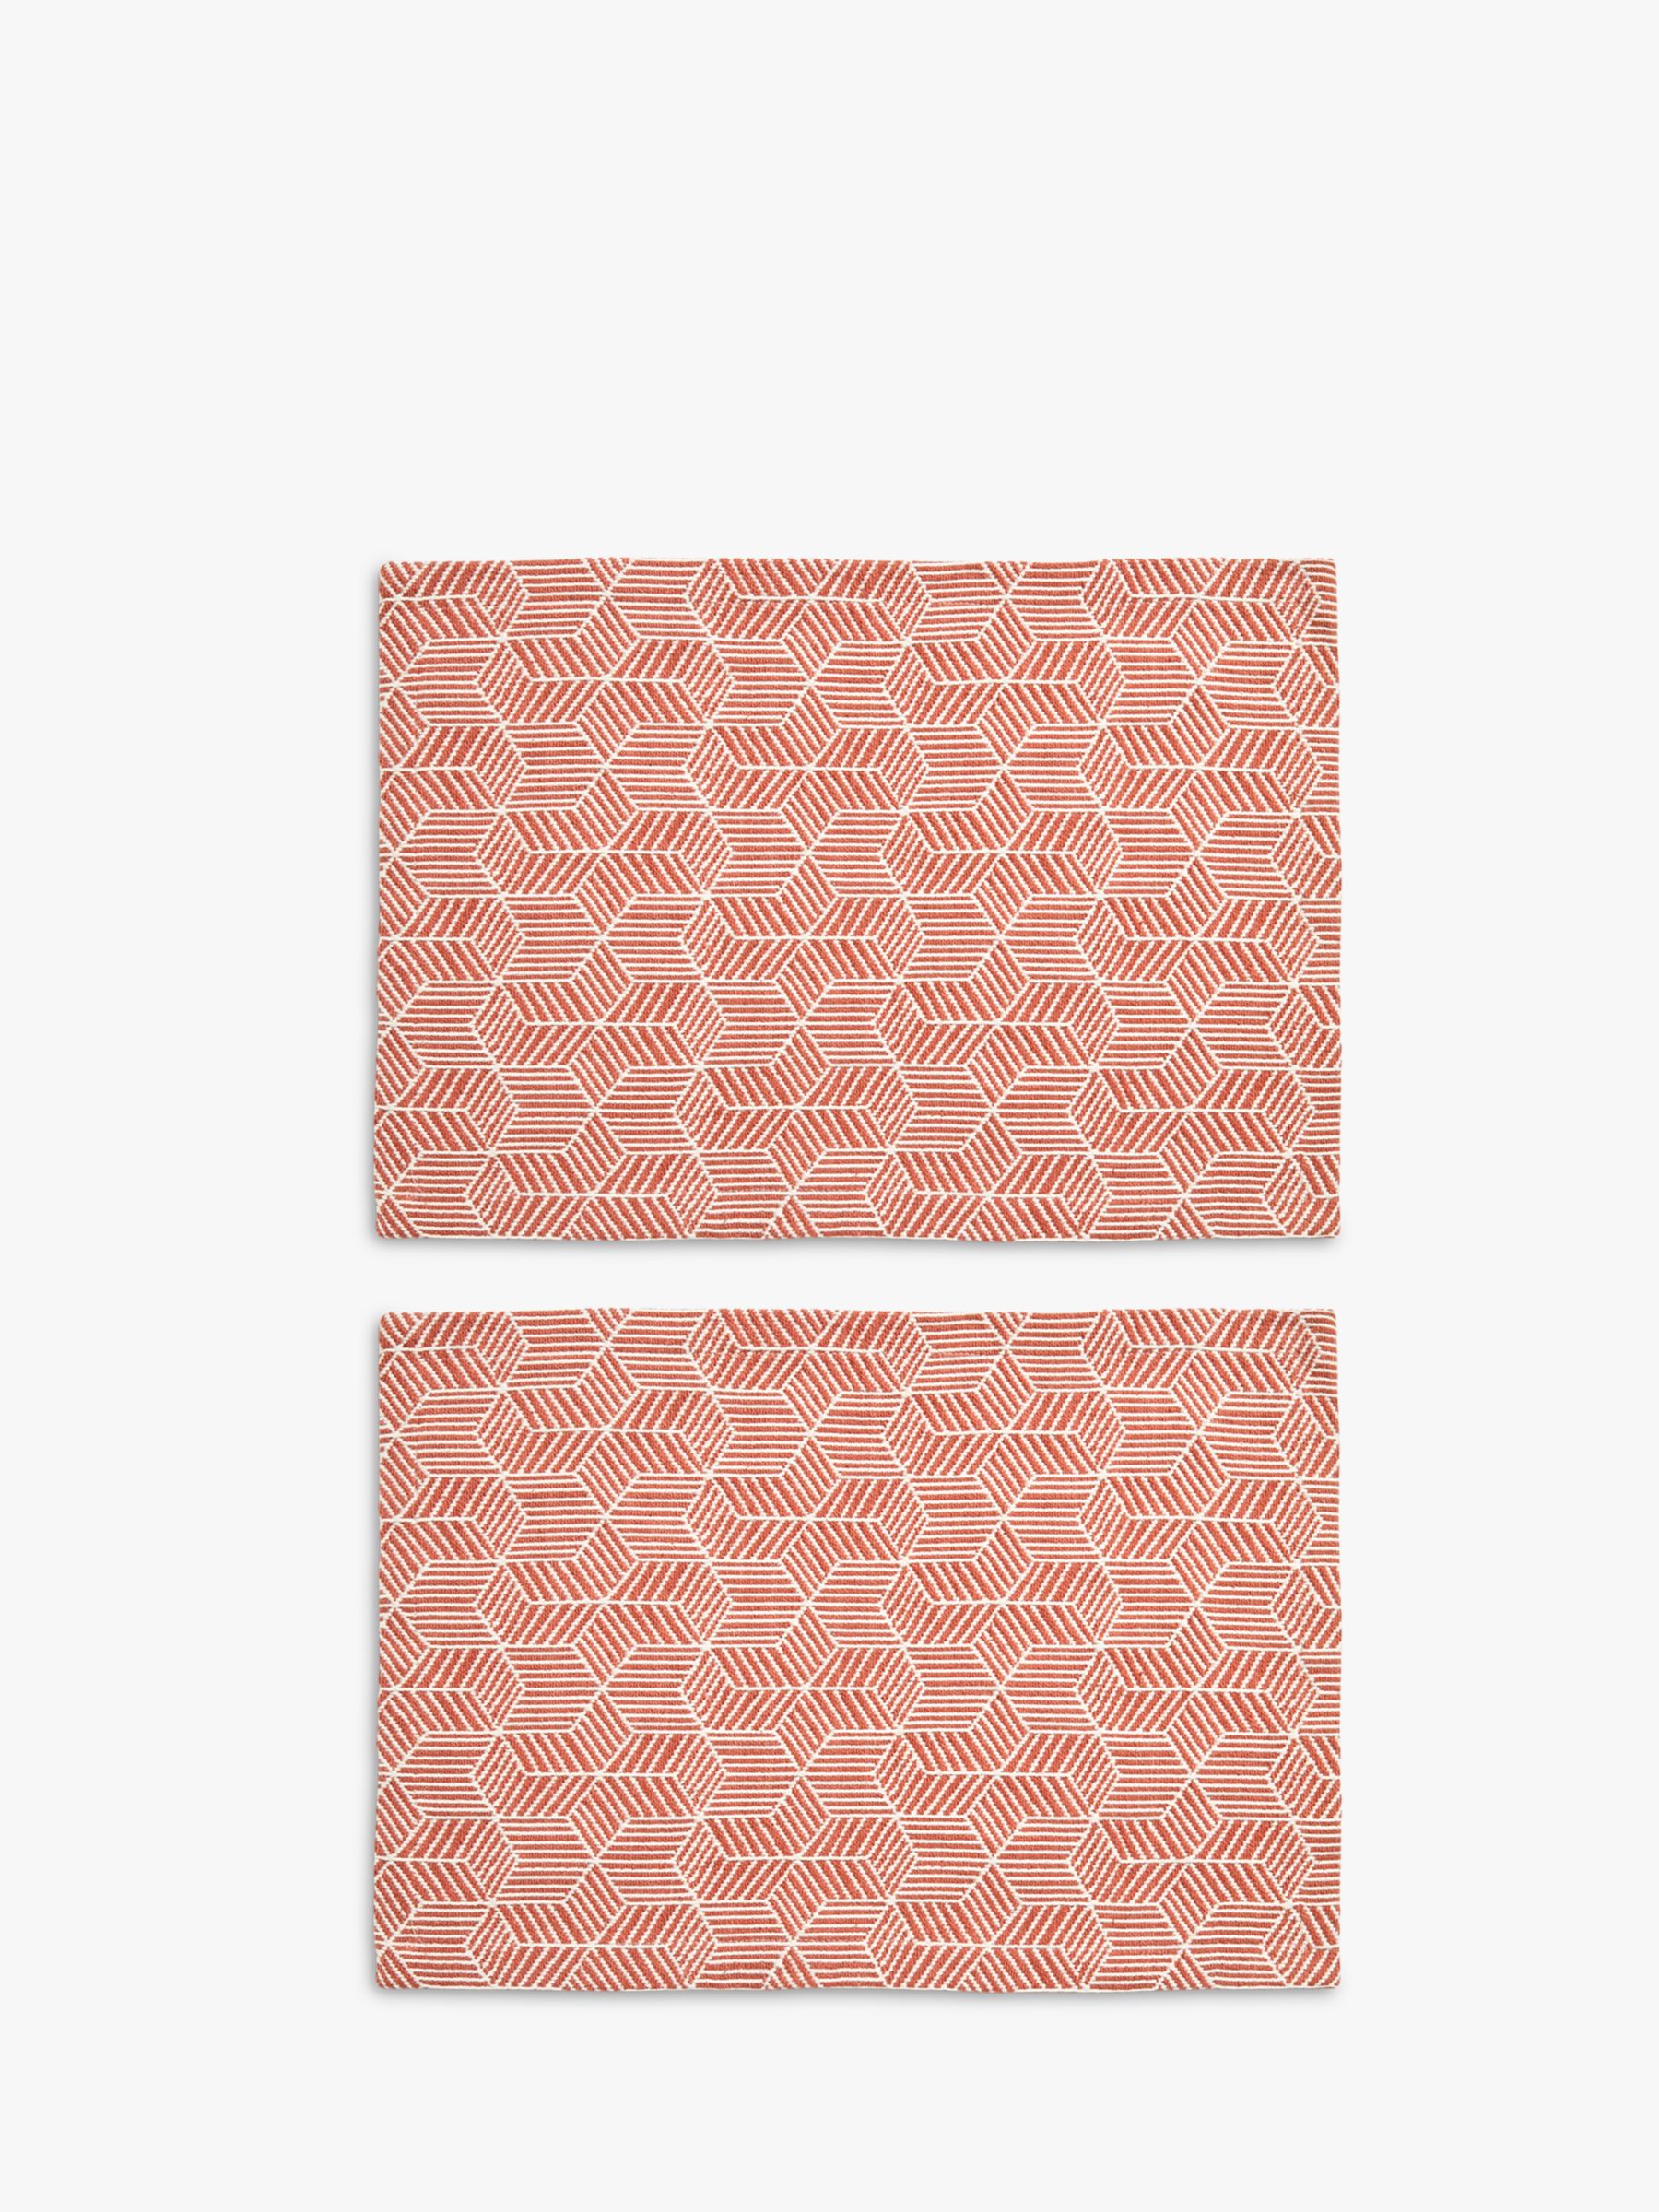 John Lewis Fusion Pattern Cotton Placemats, Set of 2